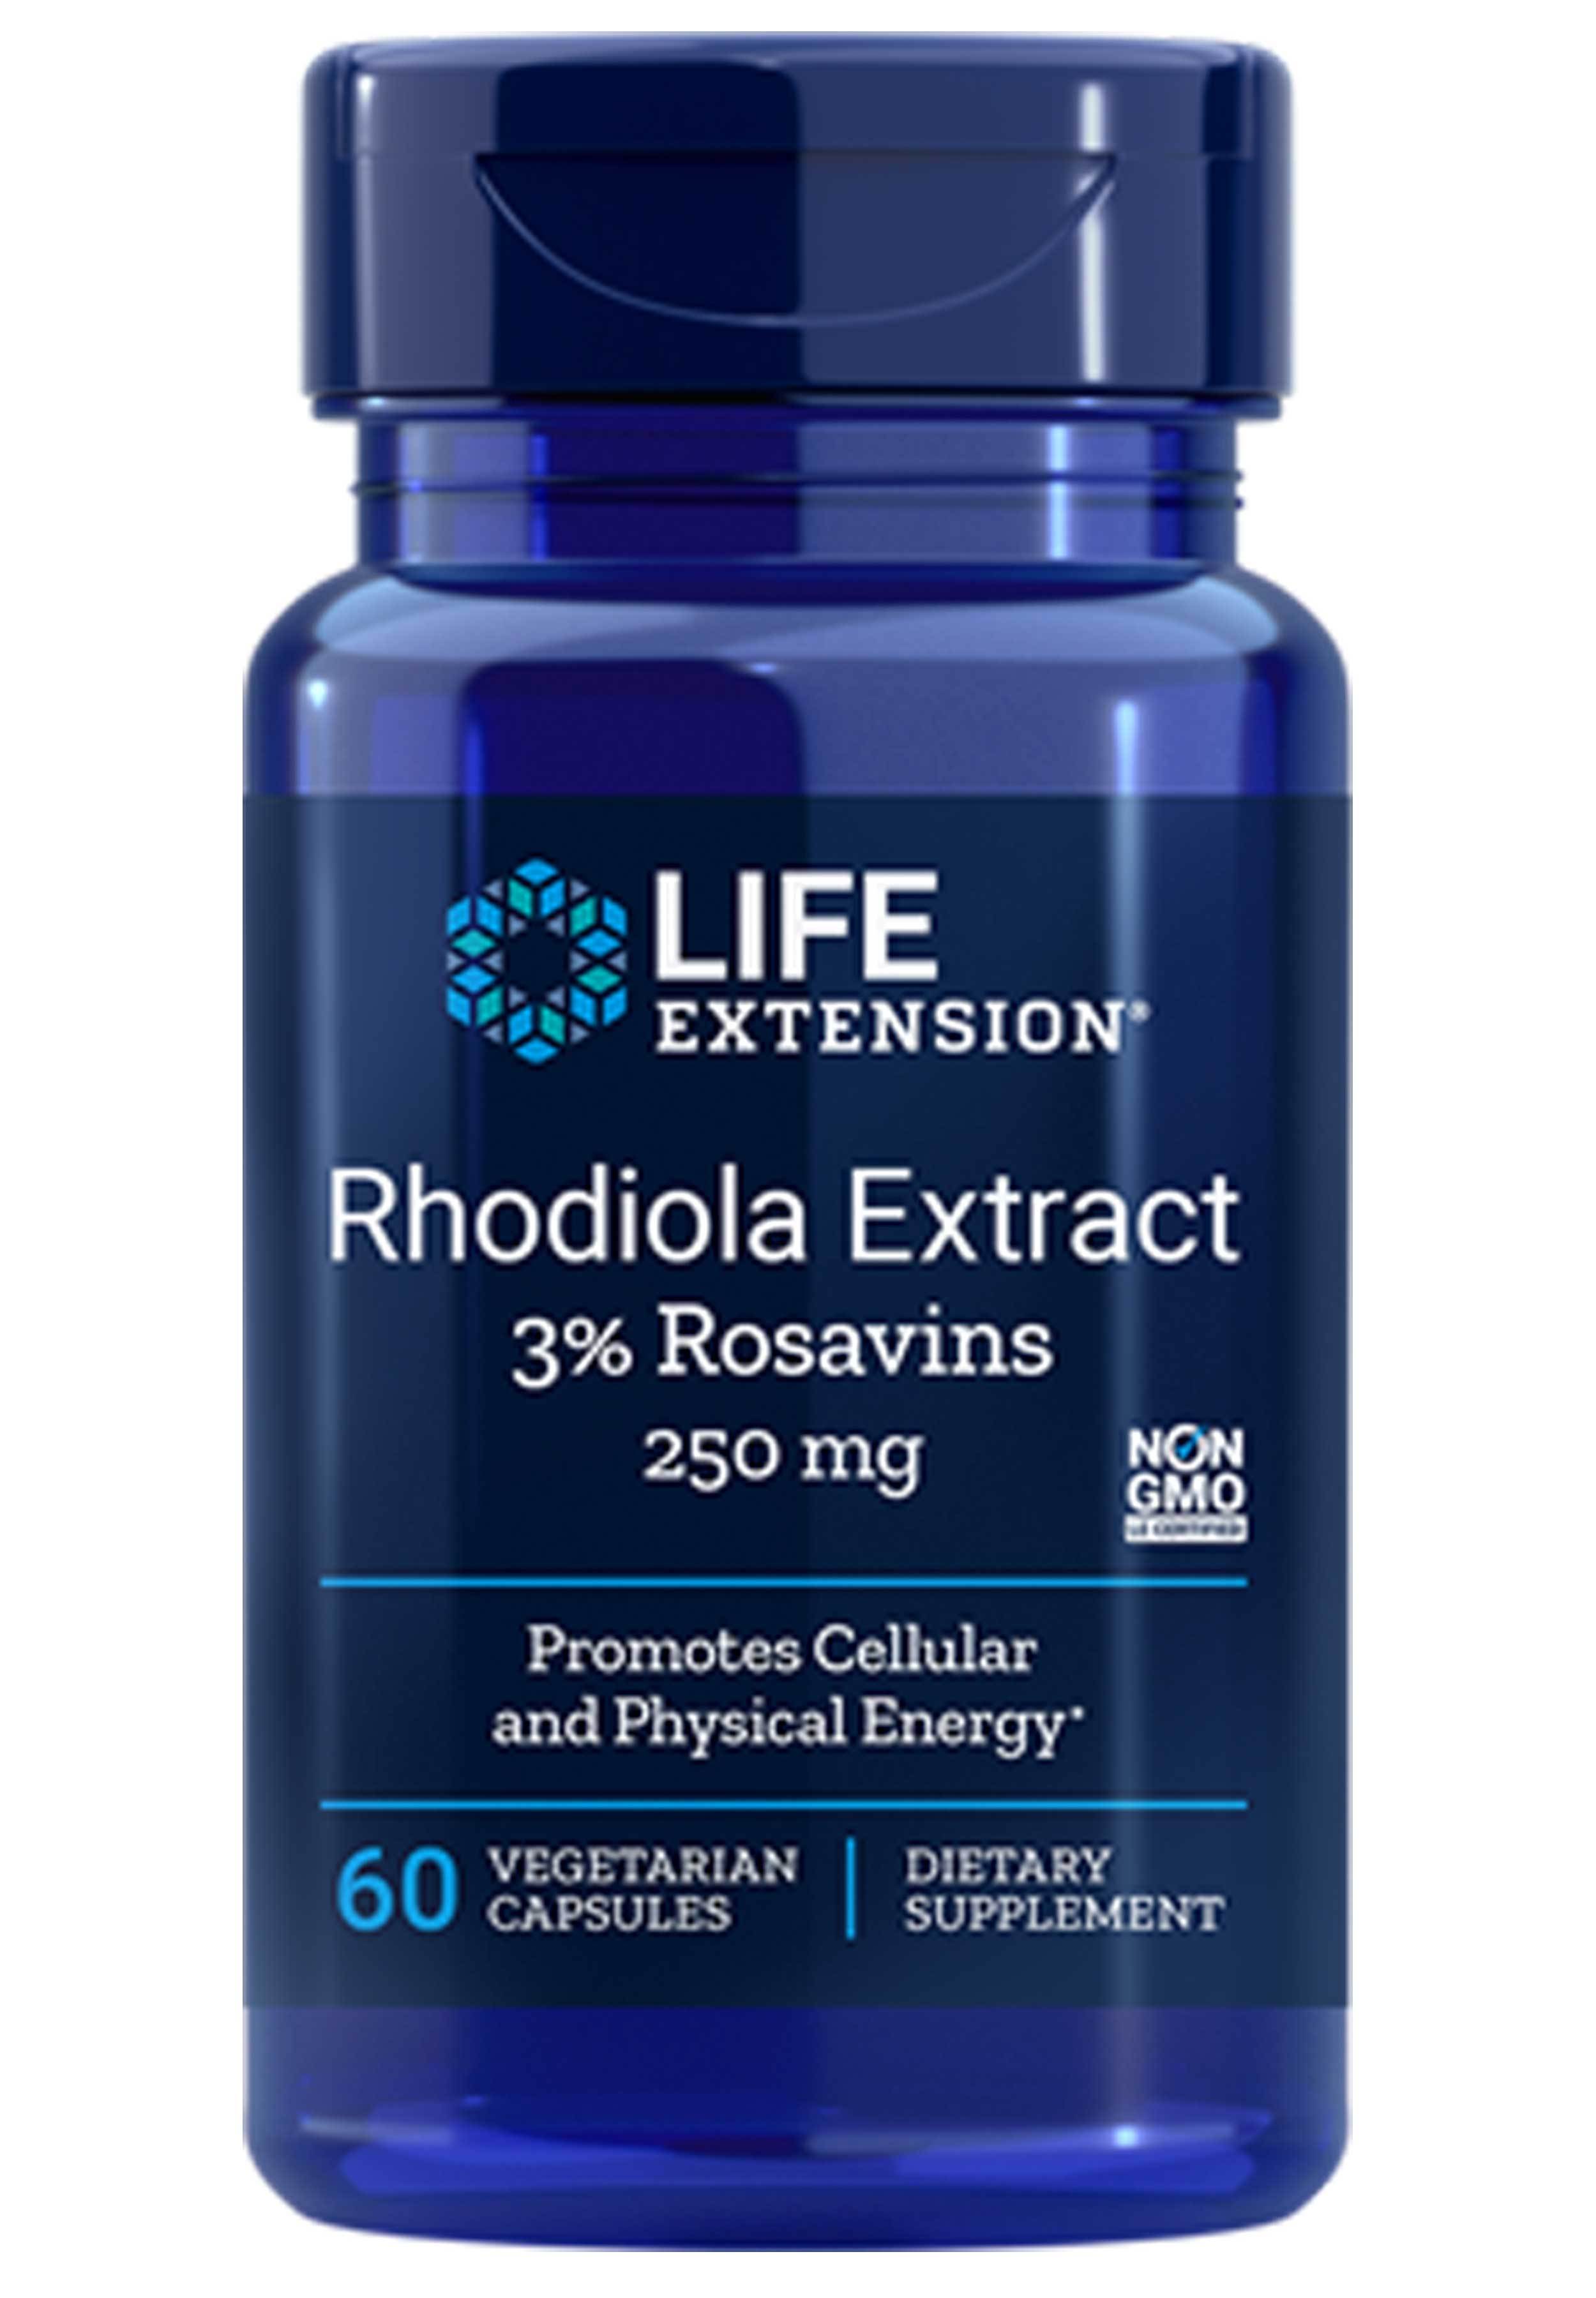 Life Extension Rhodiola Extract (3% Rosavins)